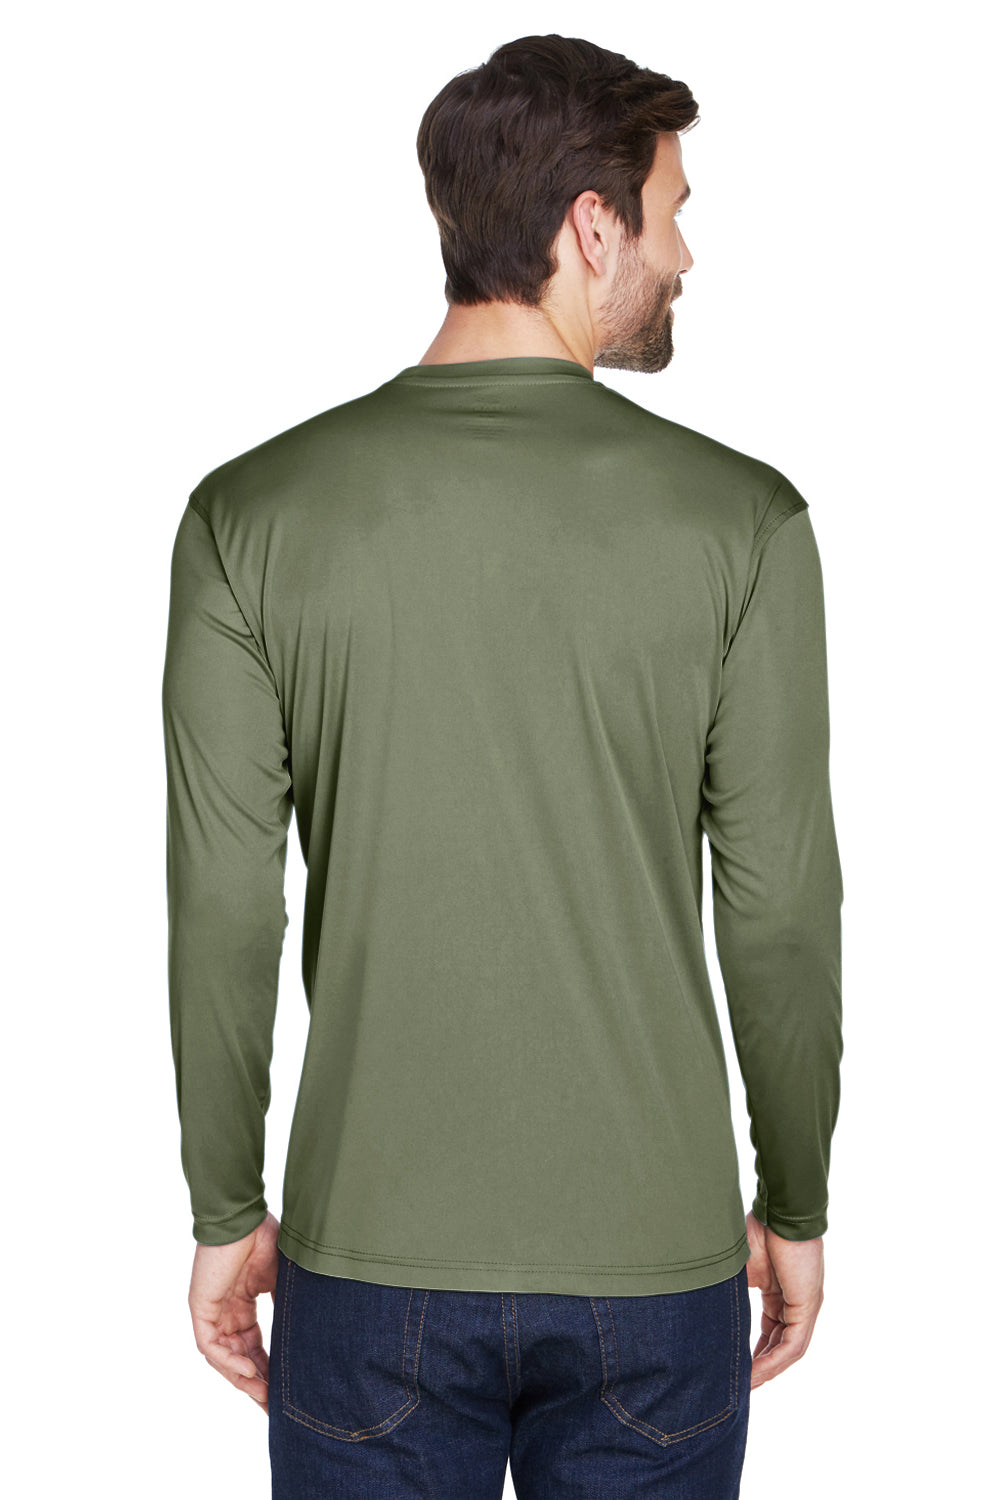 UltraClub 8422 Mens Cool & Dry Performance Moisture Wicking Long Sleeve Crewneck T-Shirt Military Green Back